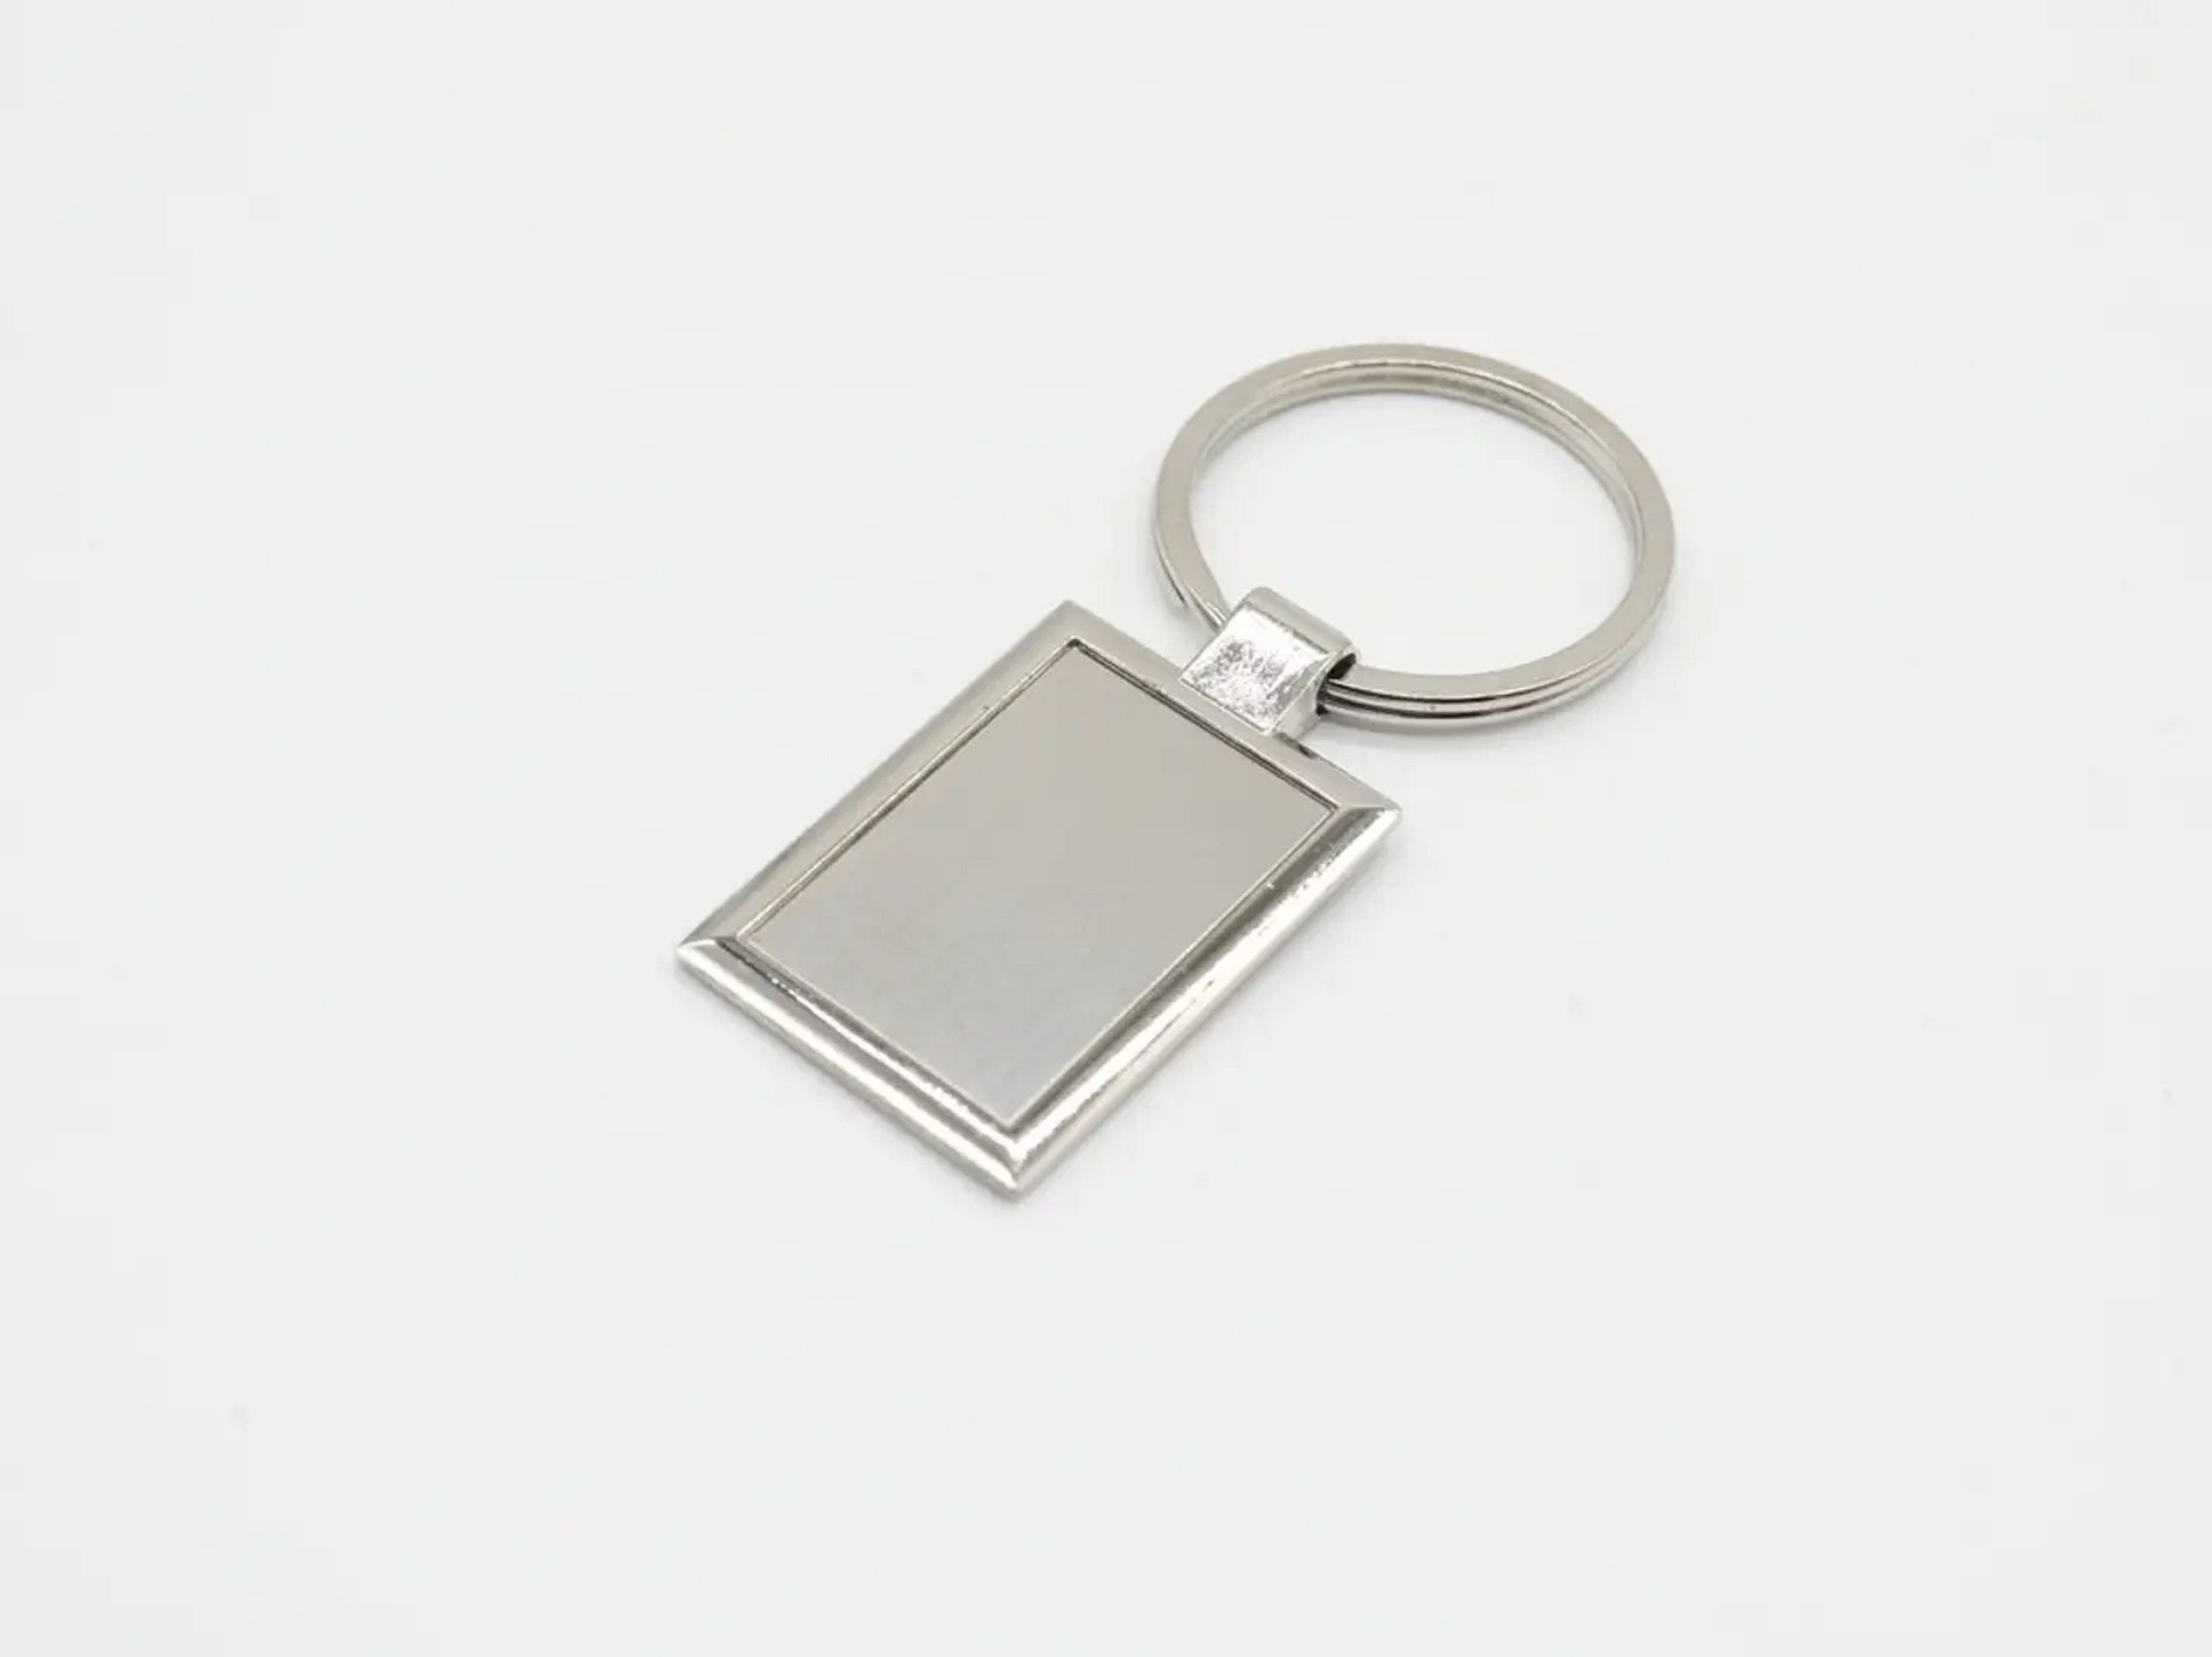 Blank Keychain Key Chain Gifts Car Metal Logo Keychain Hardware